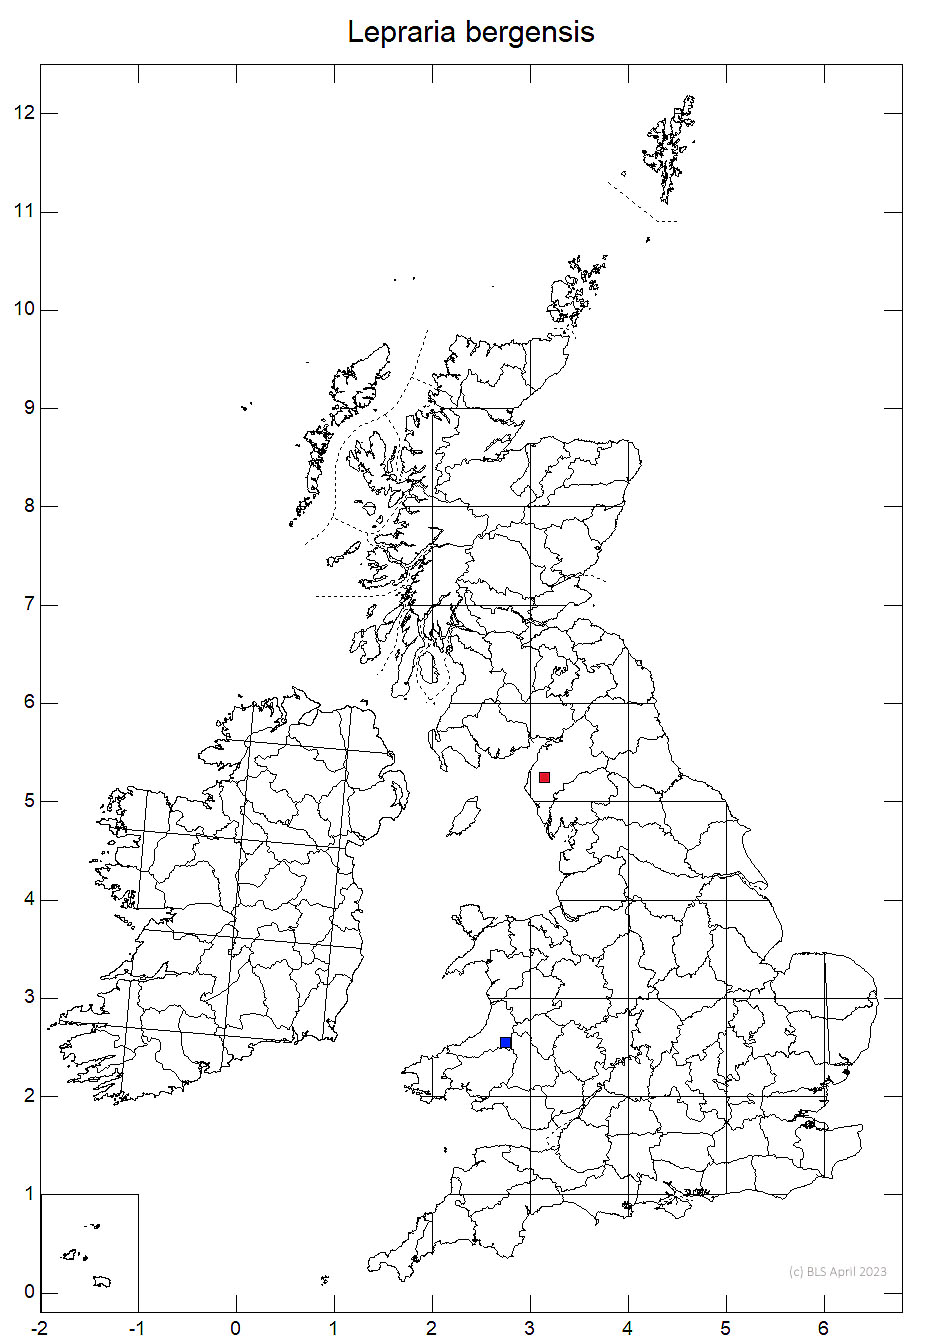 Lepraria bergensis 10km sq distribution map